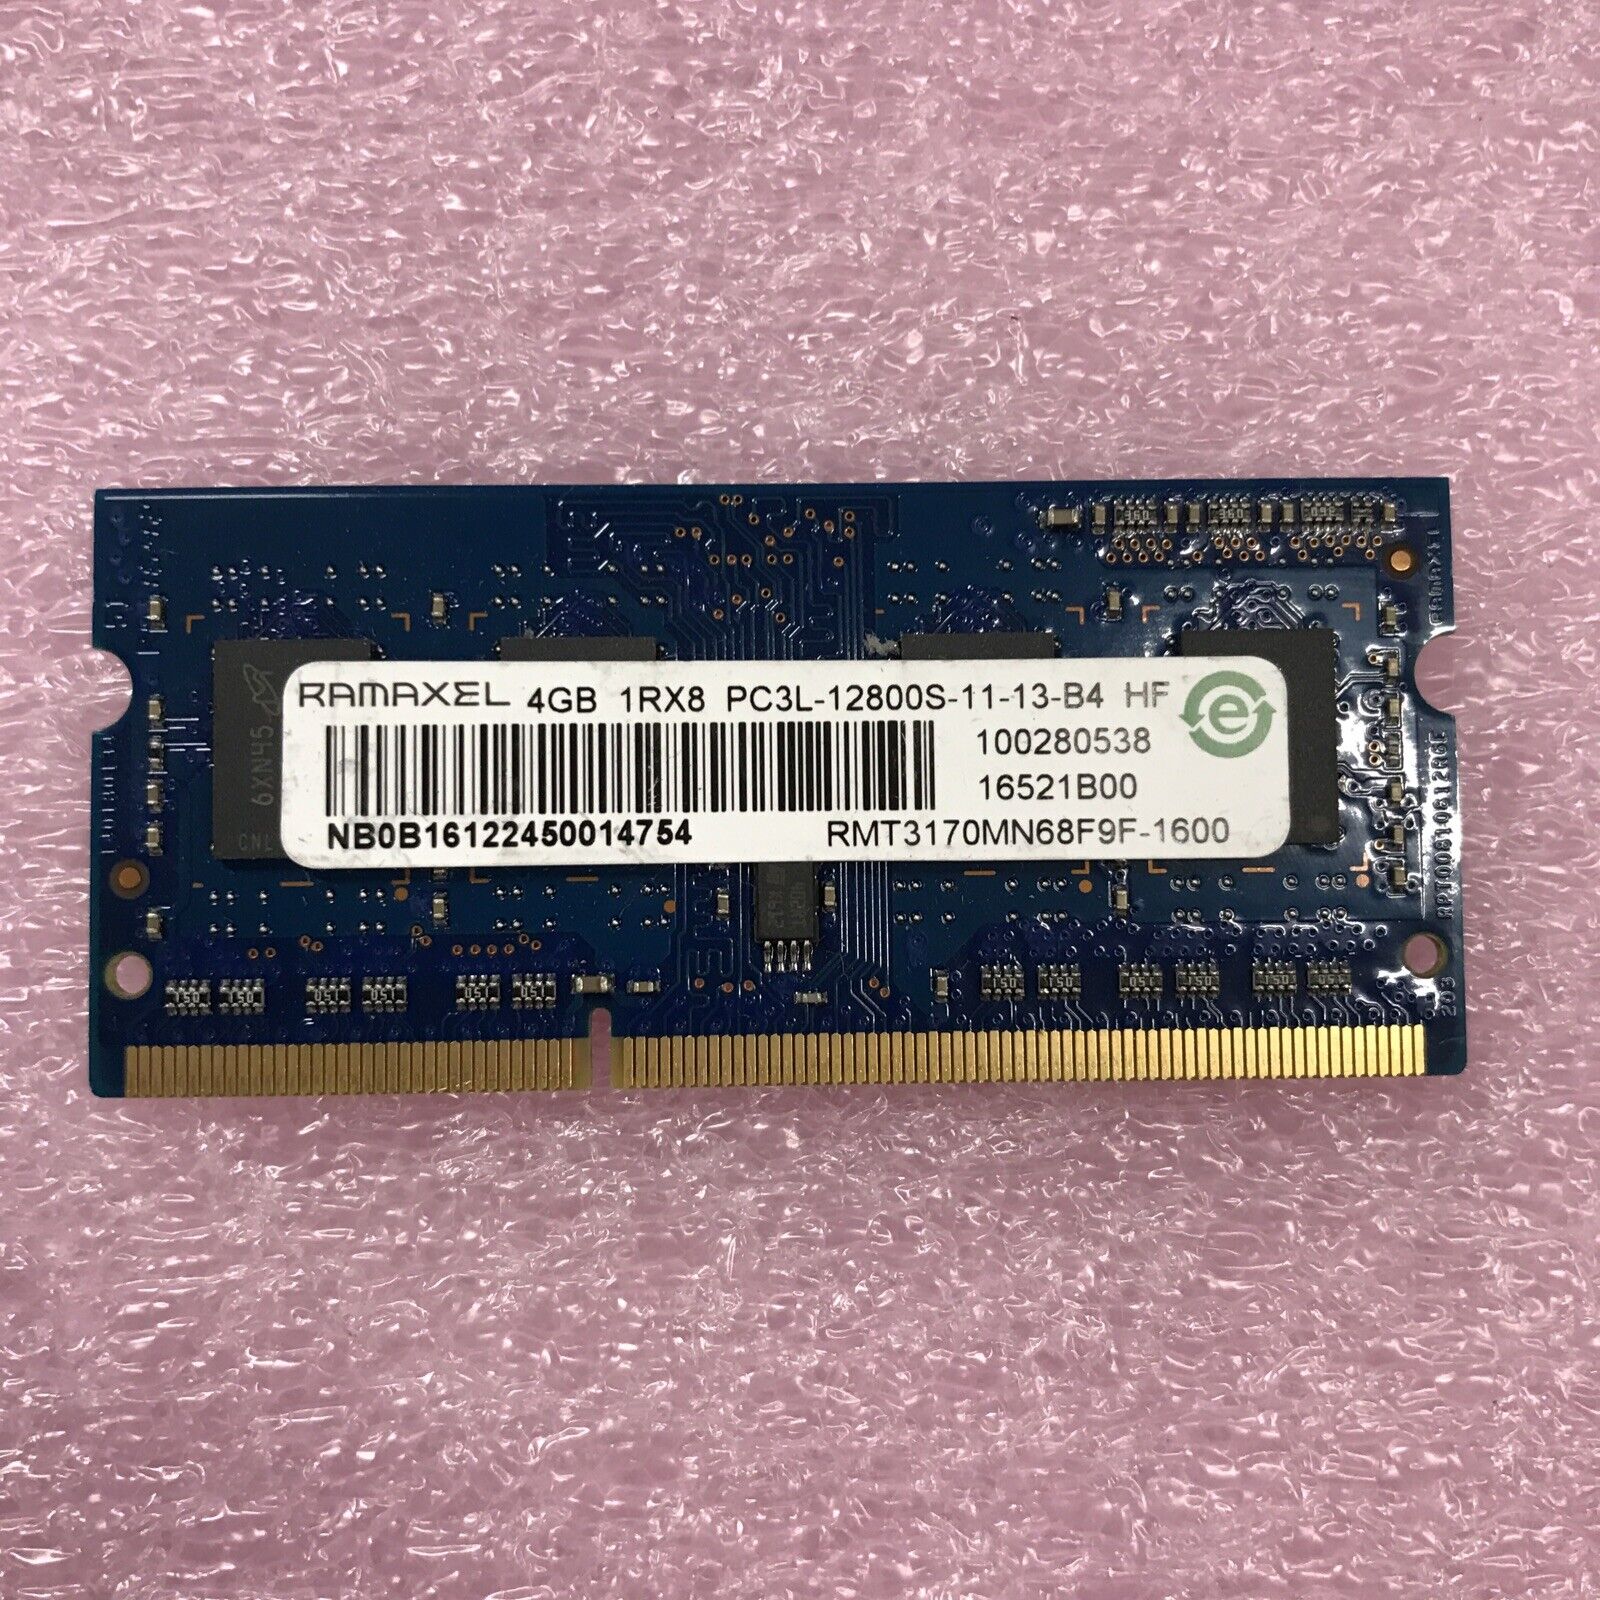 Ramaxel 8GB Kit 2x4GB 1Rx8 PC3L-12800S-11-13-B4 Laptop Memory RMT3170MN68F9F